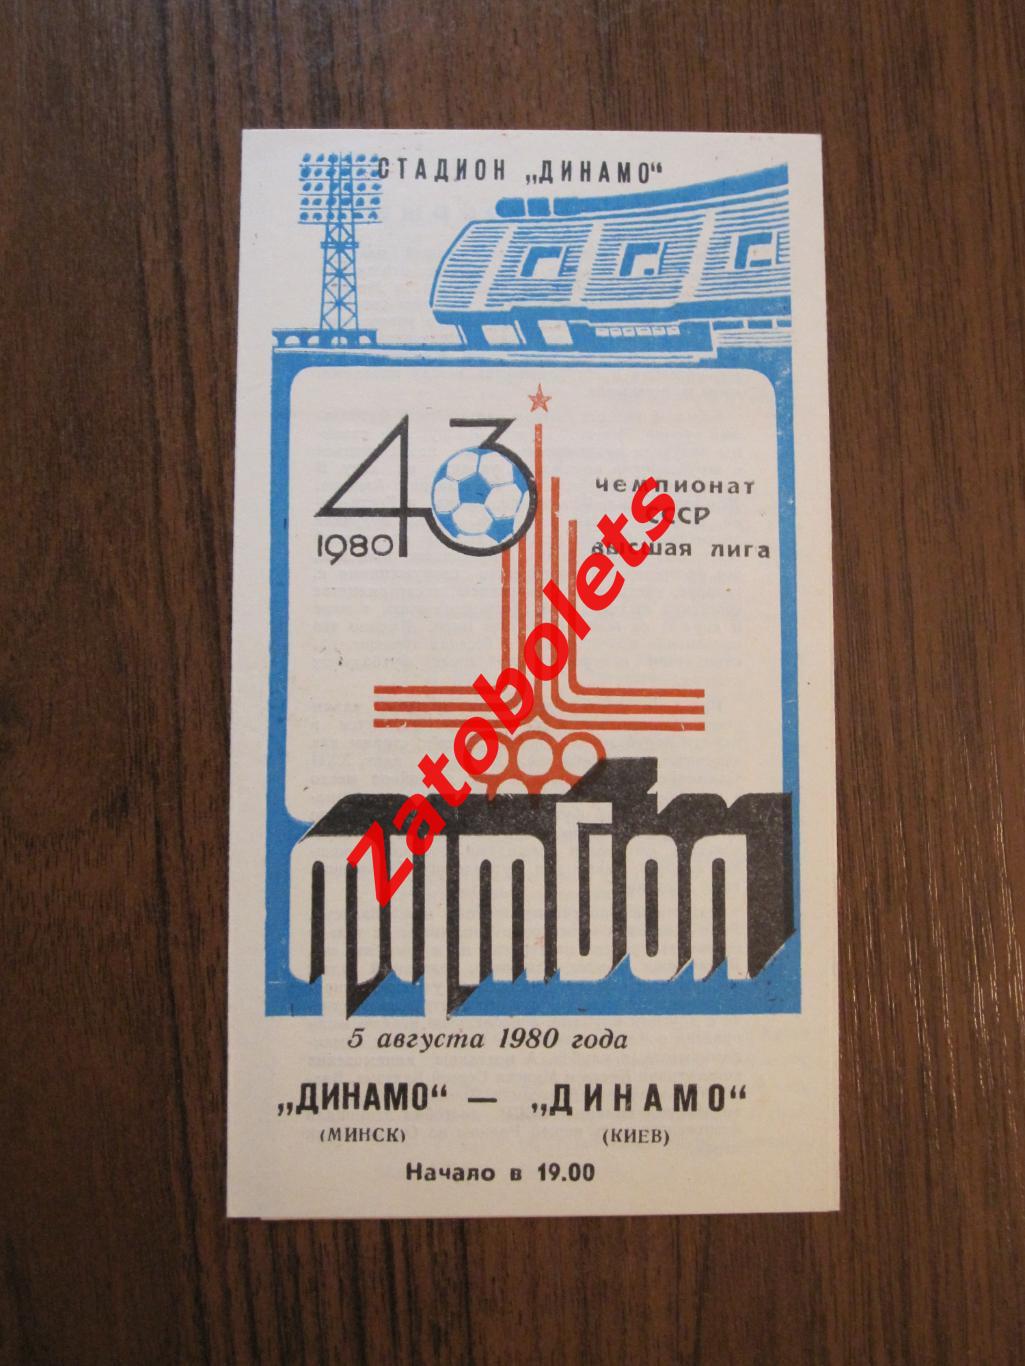 Динамо Минск - Динамо Киев 1980